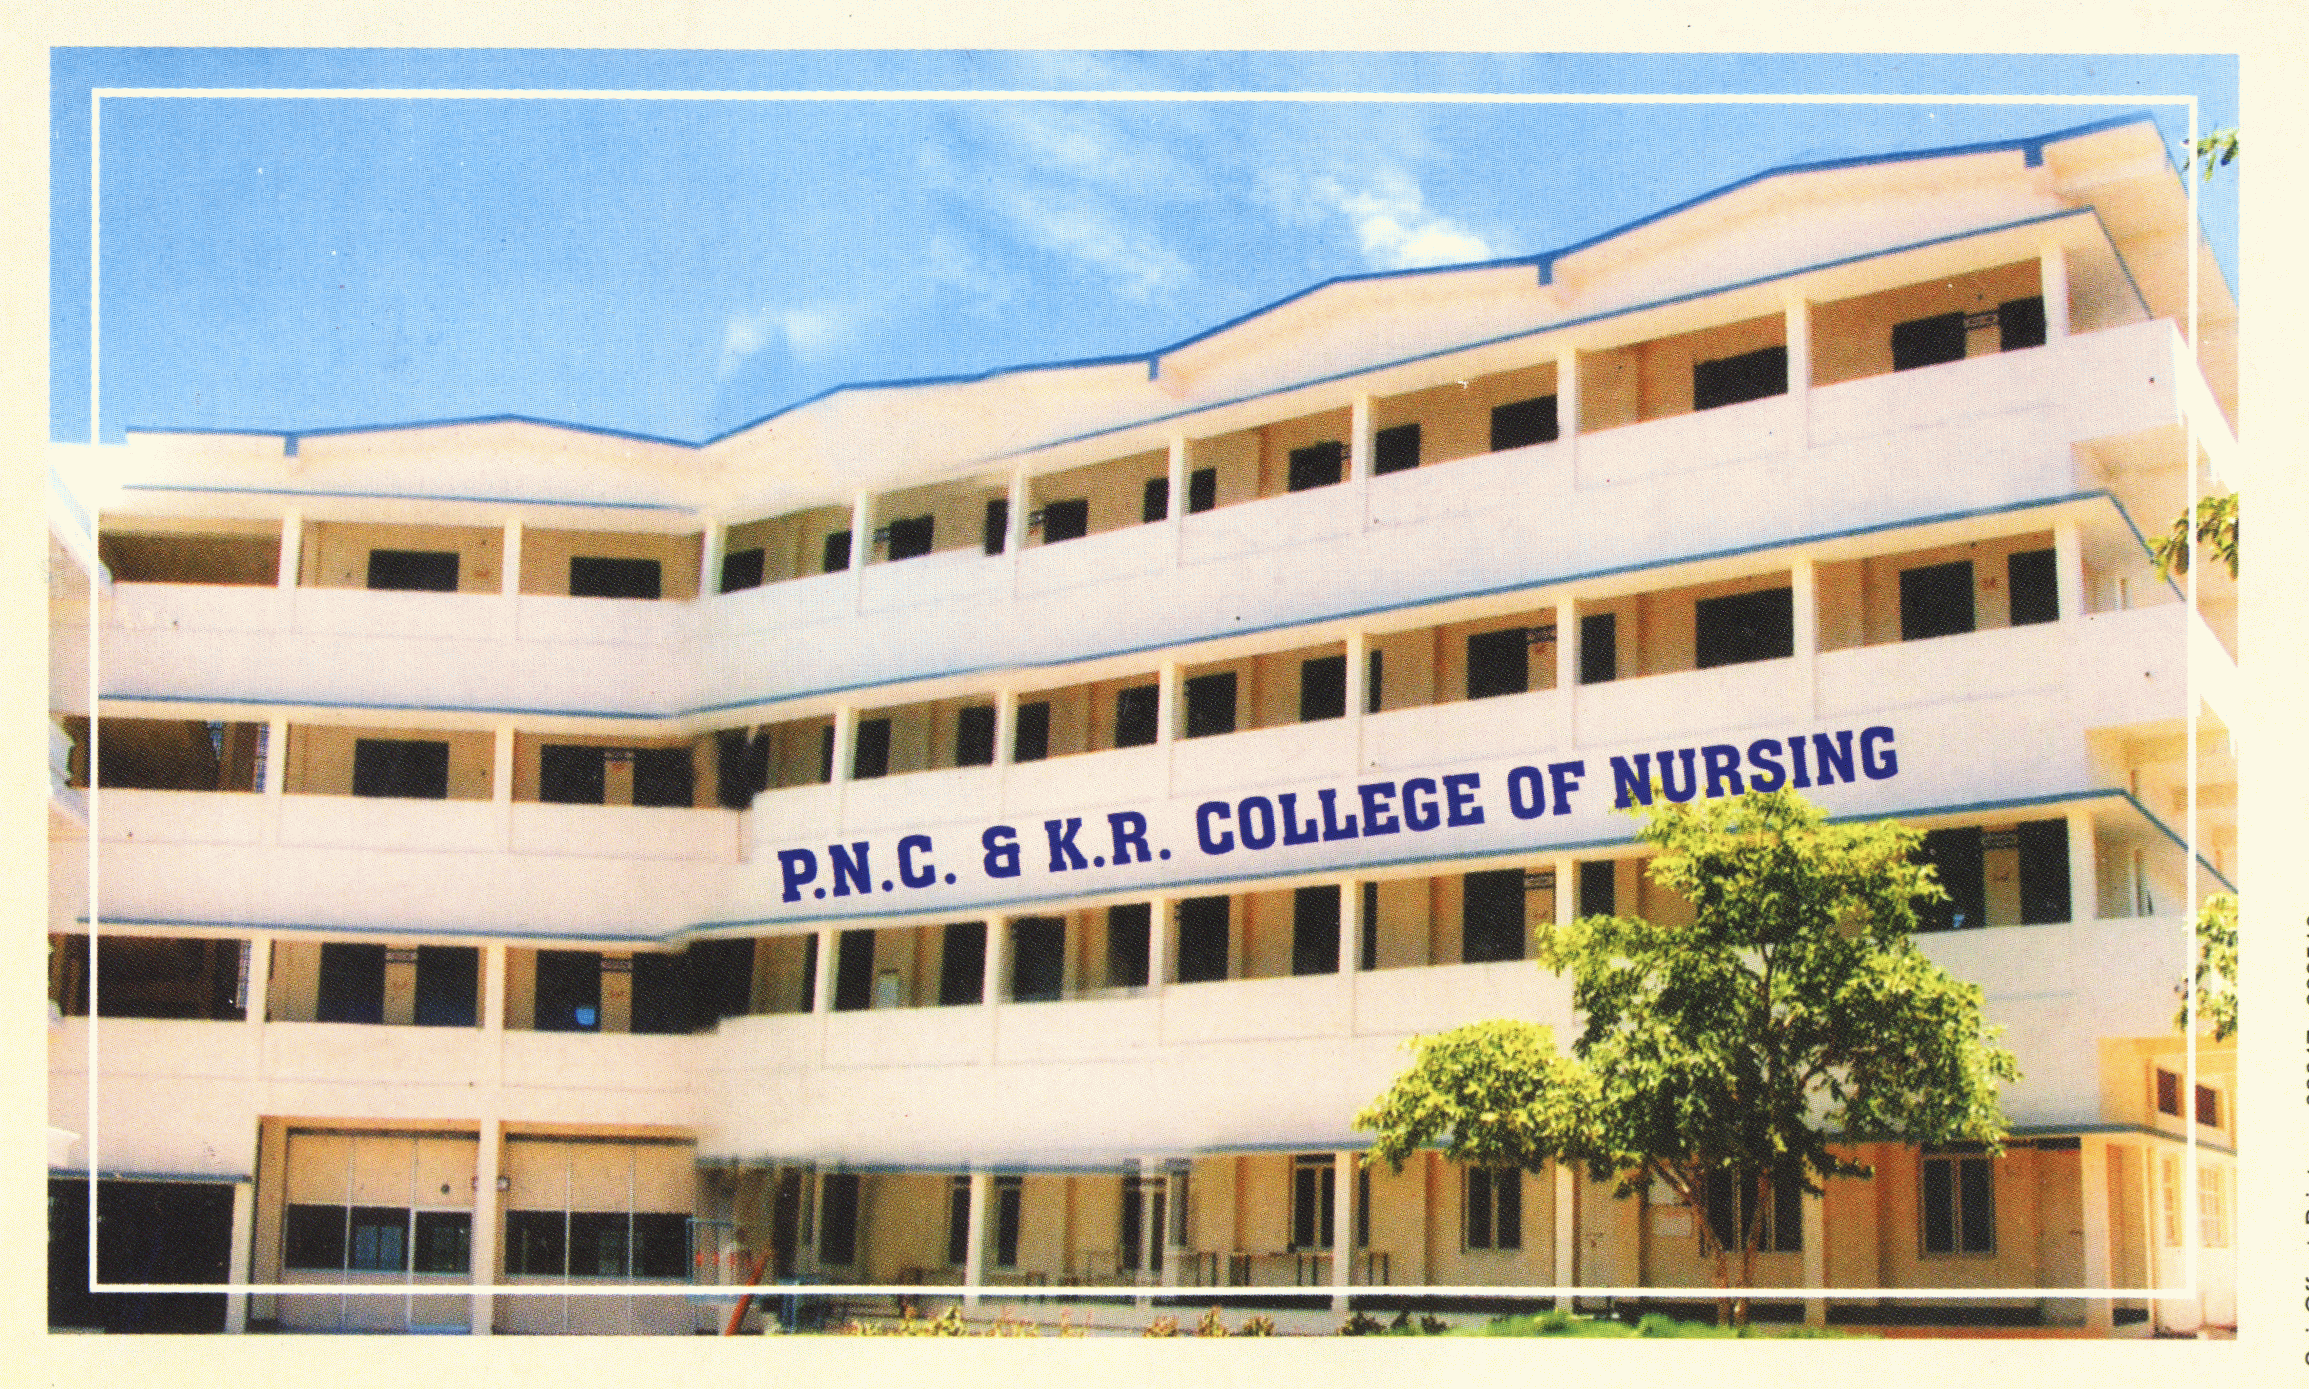 P.N.C. & K.R. College Of Nursing Image